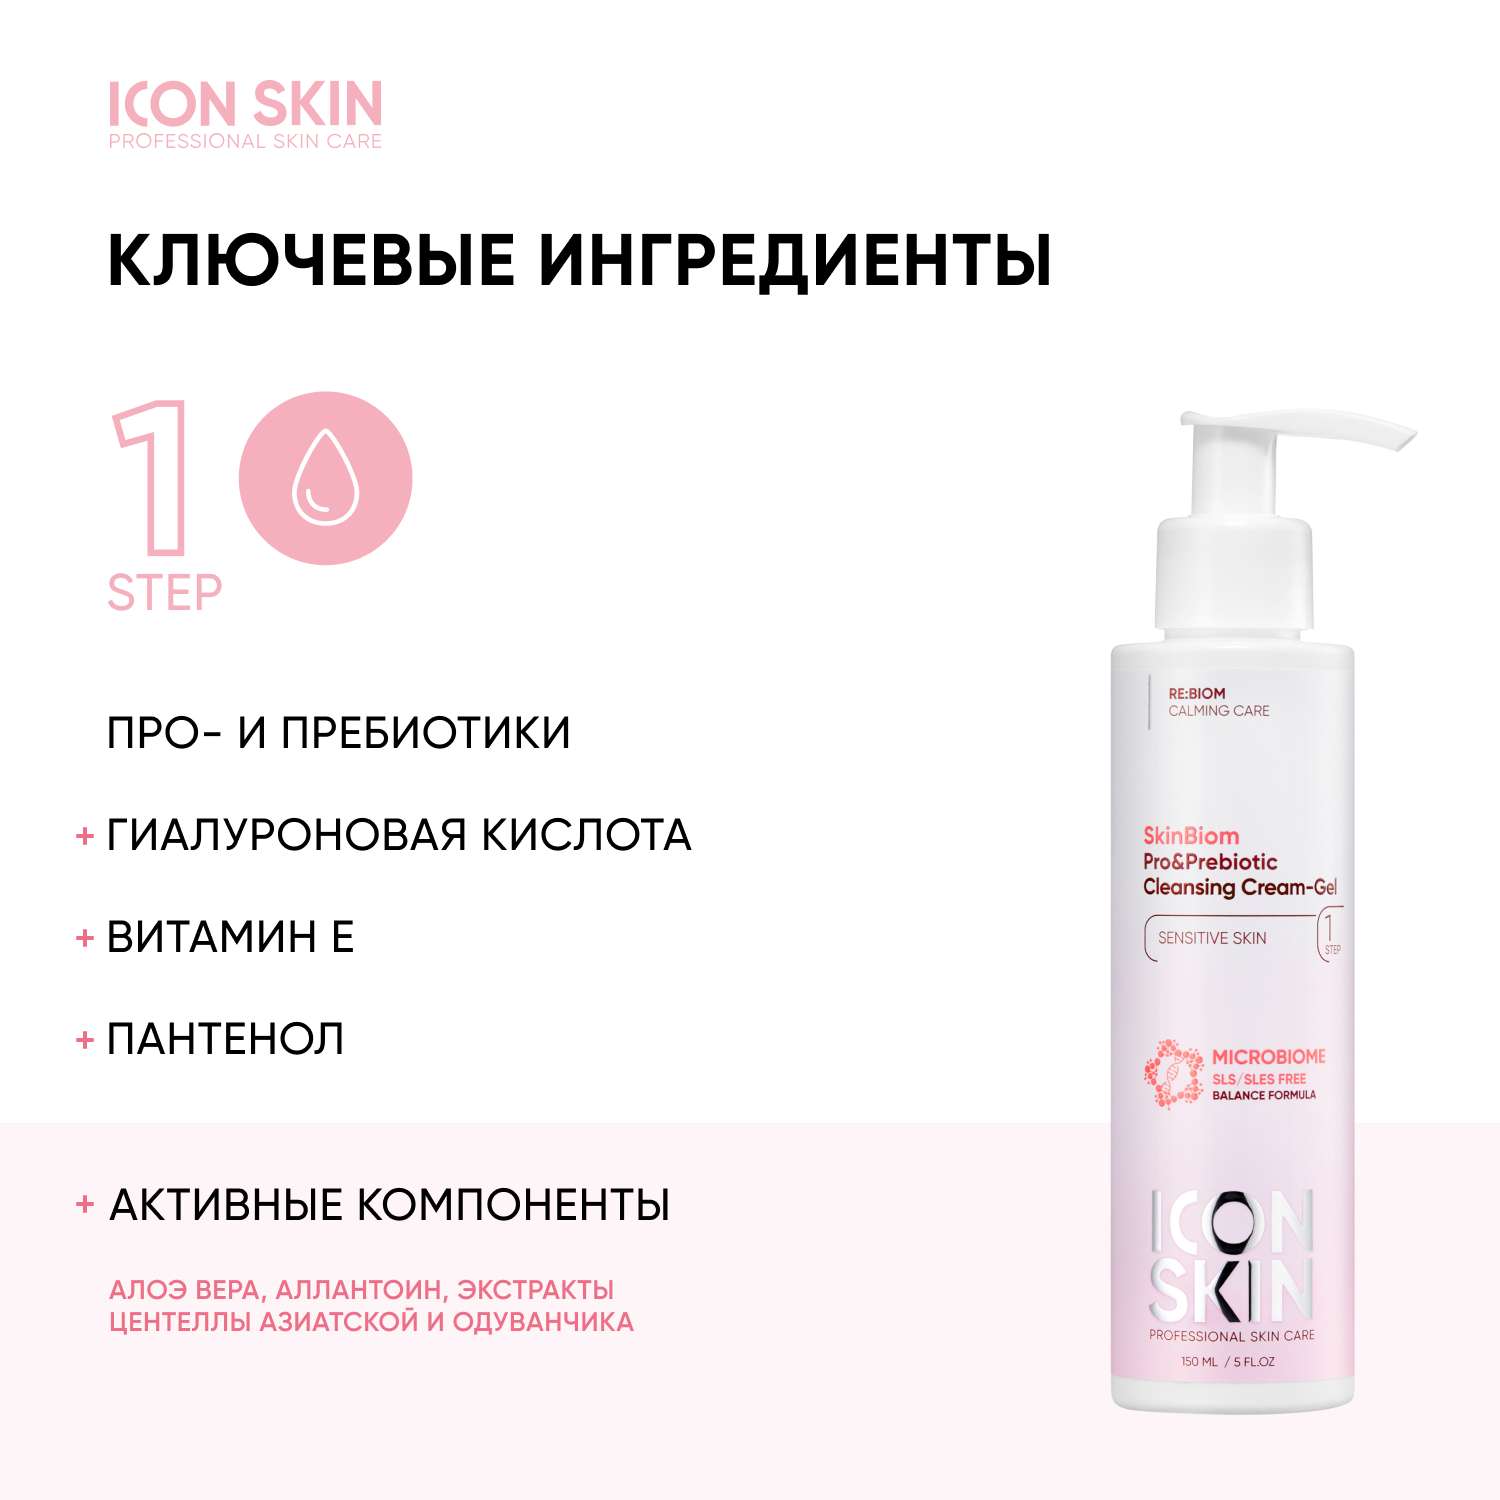 Крем-гель для умывания ICON SKIN очищающий c про- и пребиотиками skinbiom - фото 3